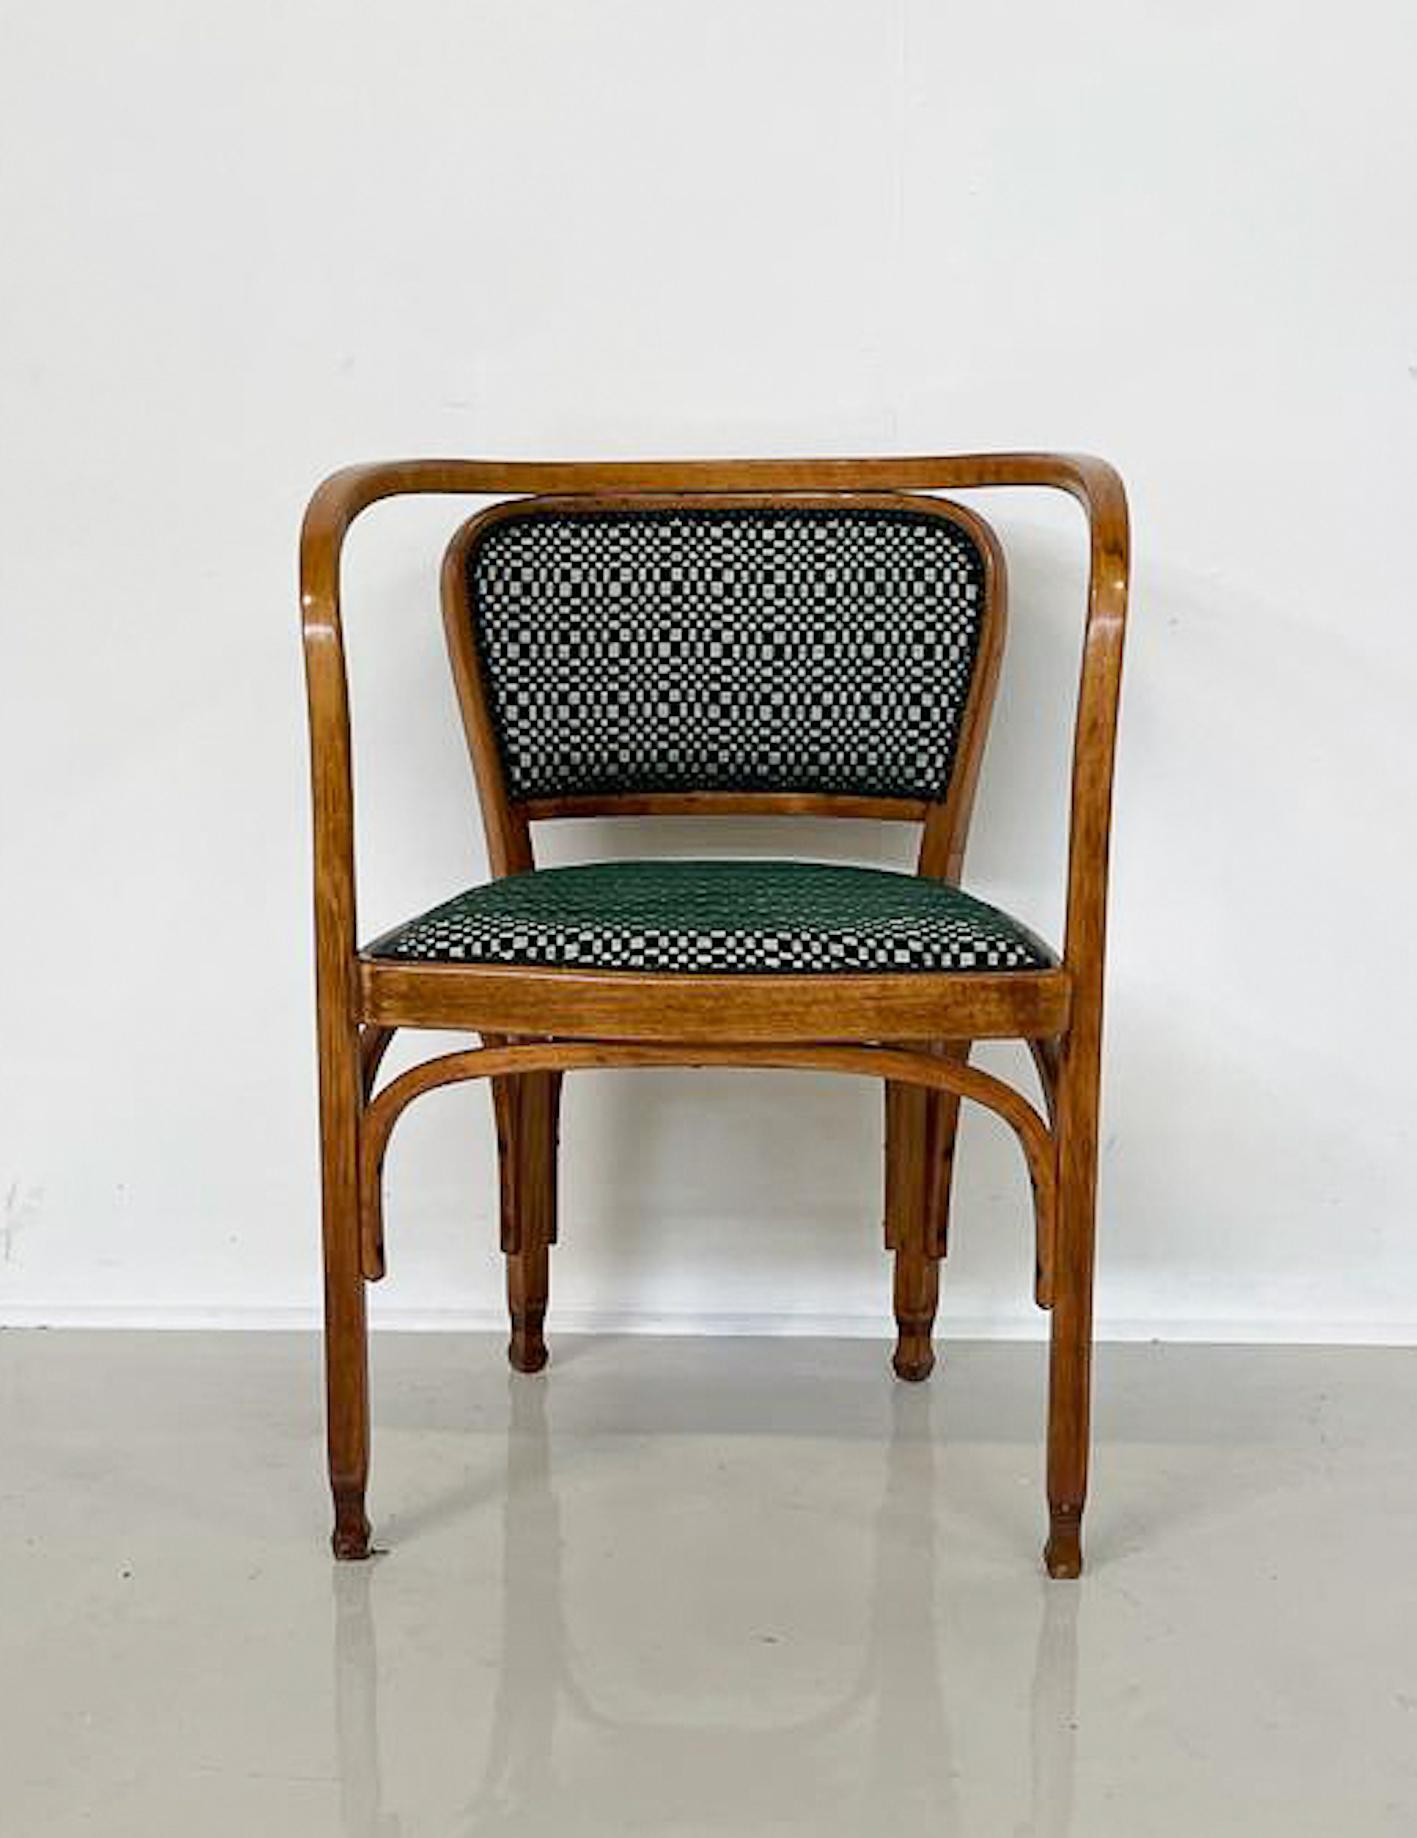 N° 715 Gustav Siegel Armchair for Kohn, Fabric and Wood, Austria, 1900s - New Upholstery - 12 Available